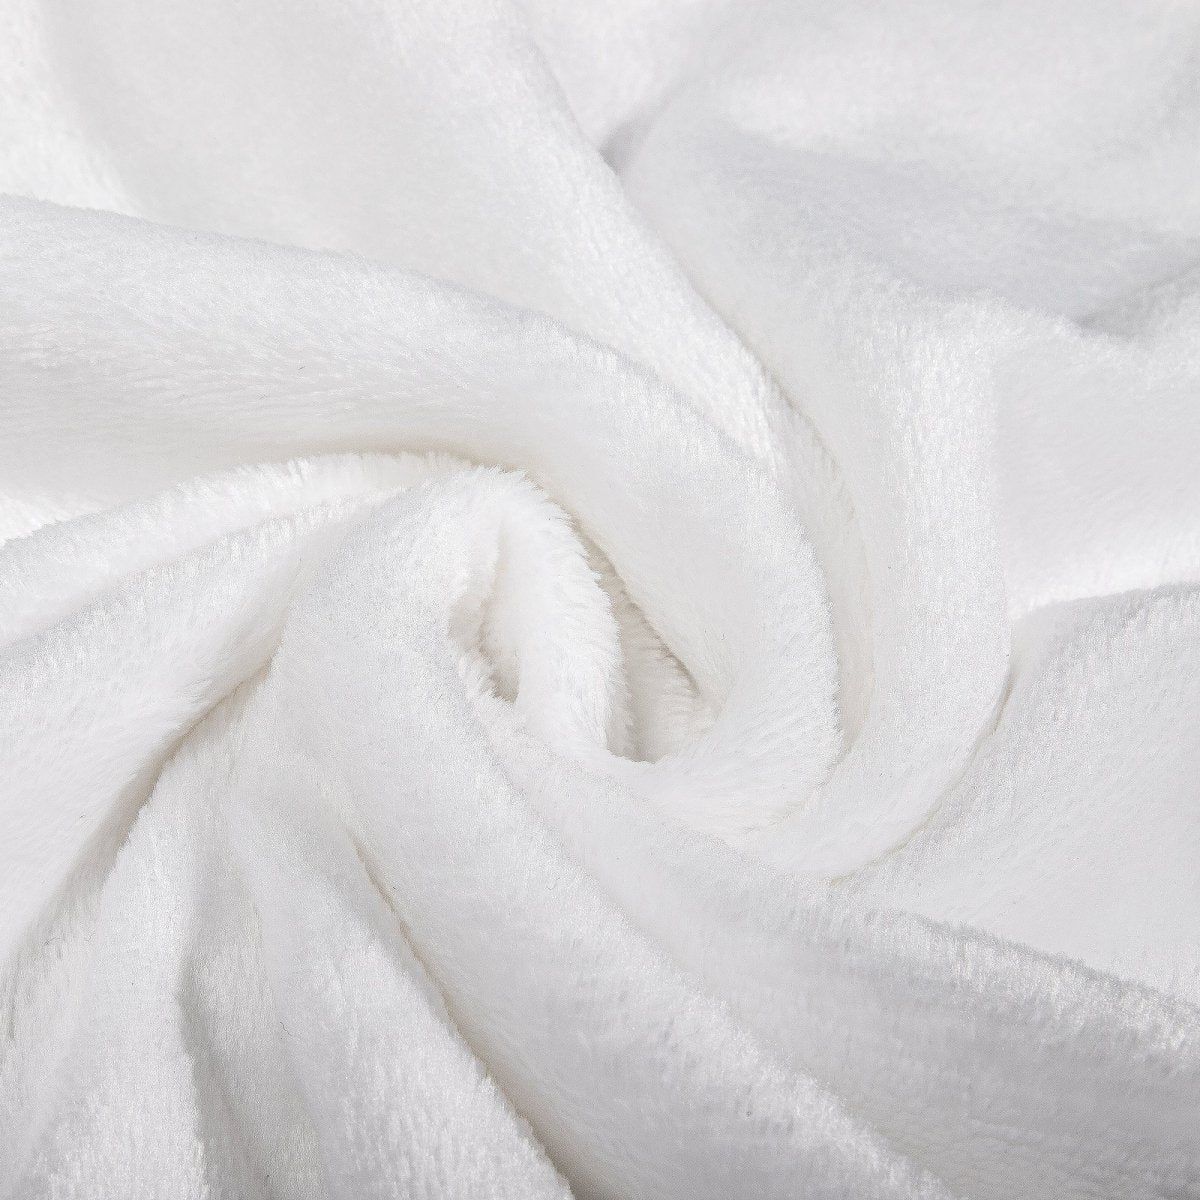 Soft Polyester Fleece Blanket with Splatter Paint Design - Premium Quality - Iron Phoenix GHG